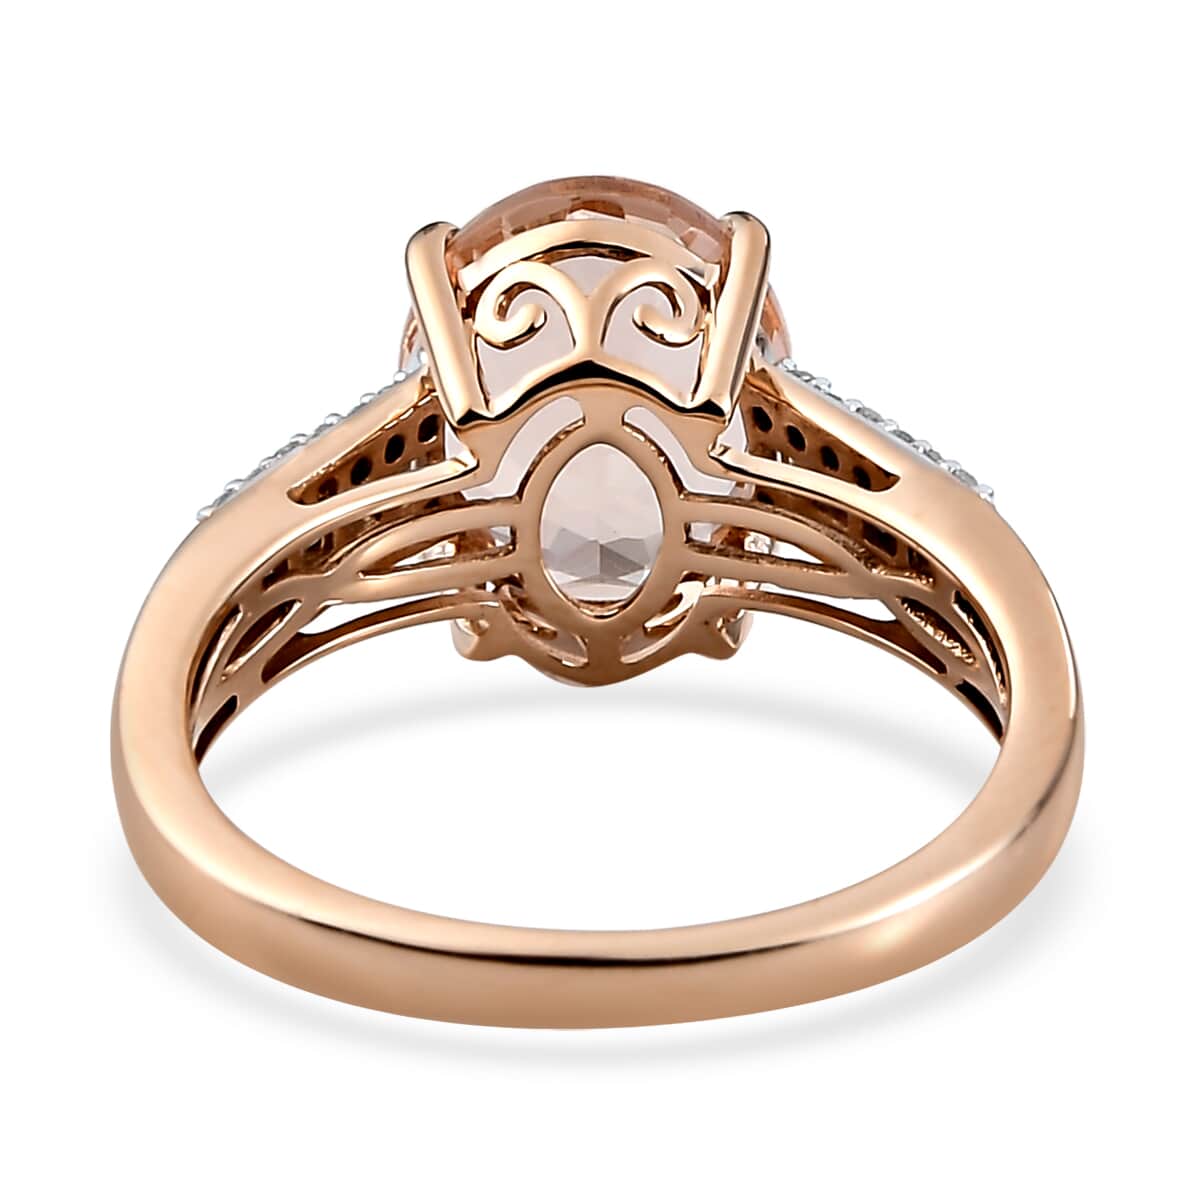 Luxoro 10K Rose Gold Premium Marropino Morganite and Diamond Ring (Size 7.0) 3.40 ctw image number 4